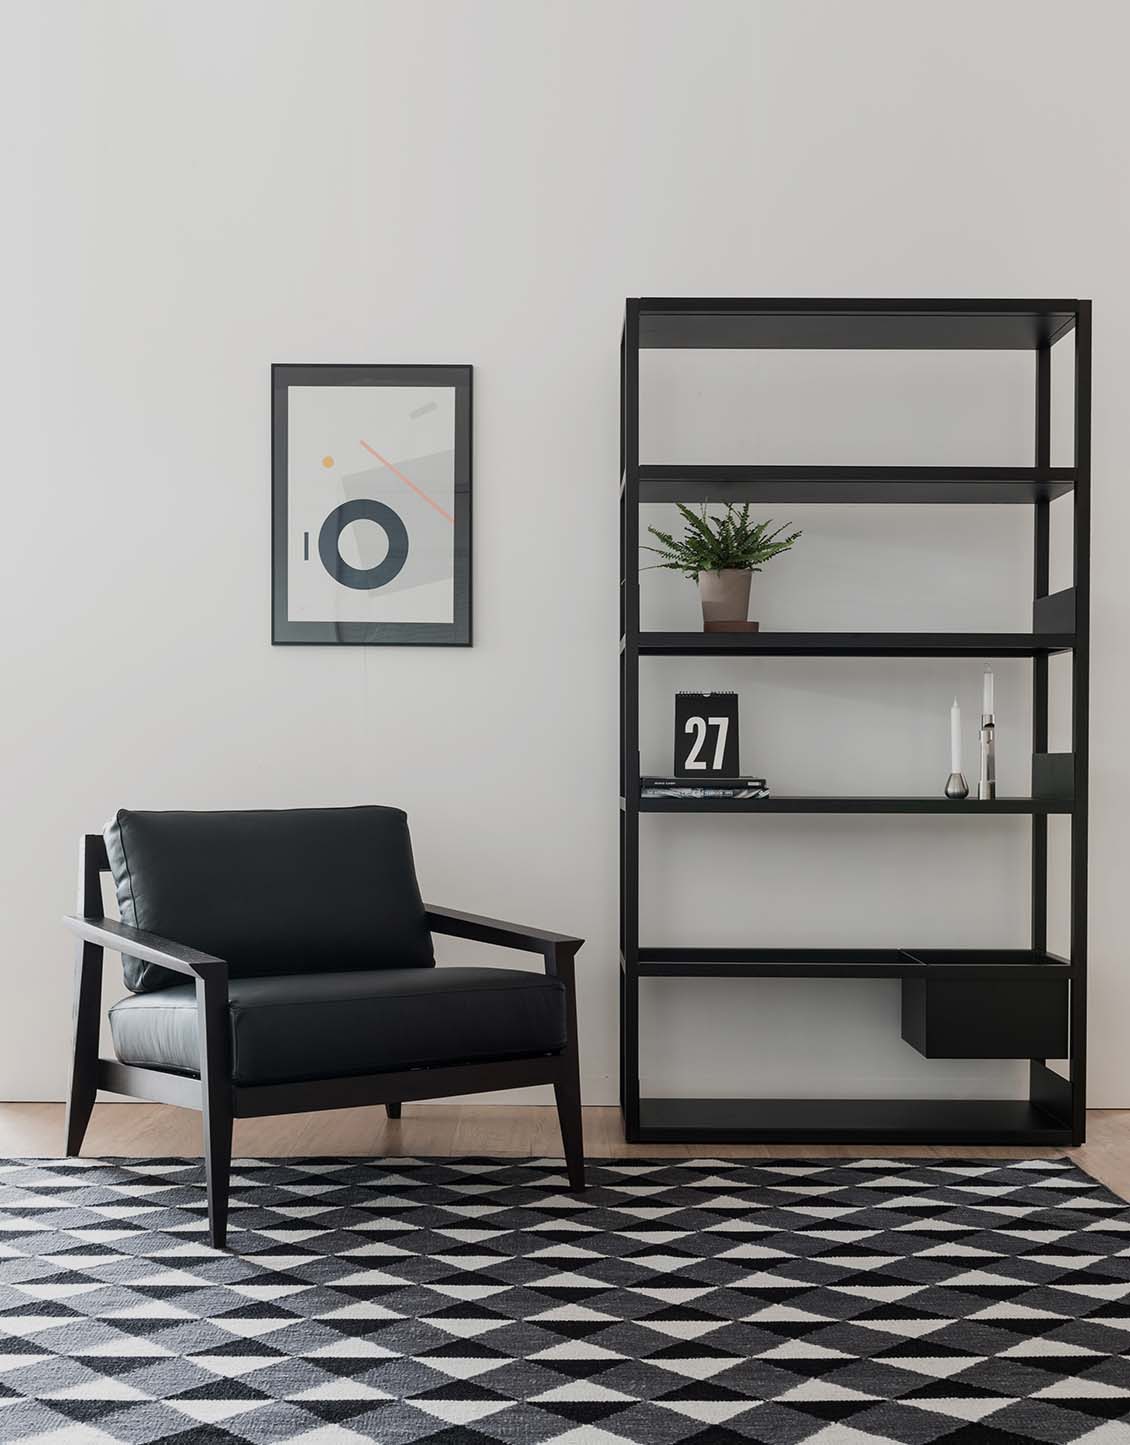 Case Furniture - Stanley Chair - Sofas